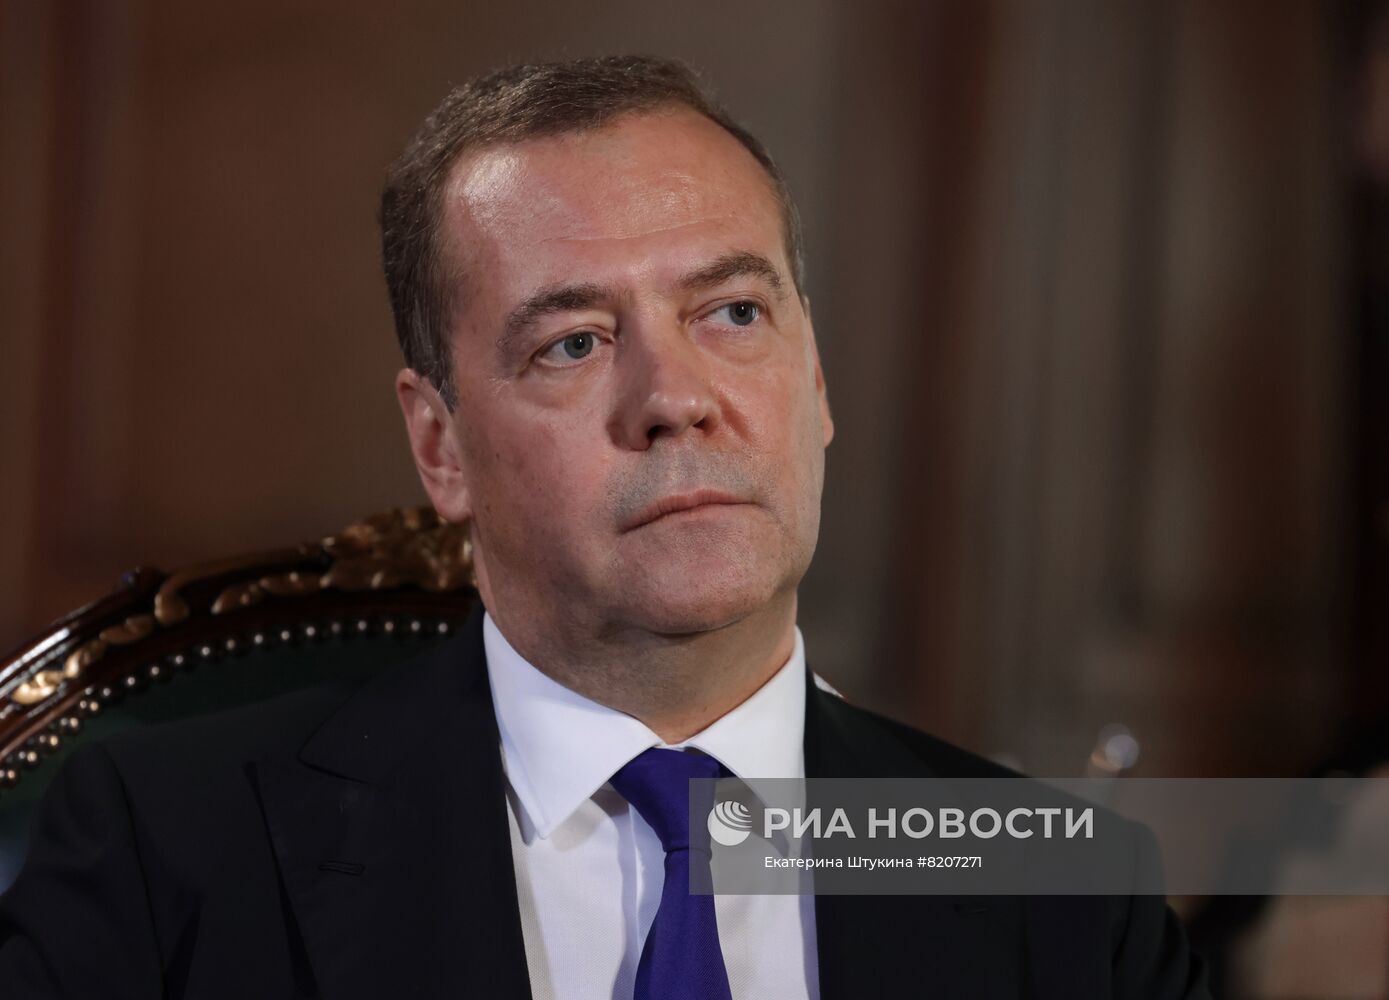 Д. Медведев дал интервью телеканалу "Аль-Джазира"